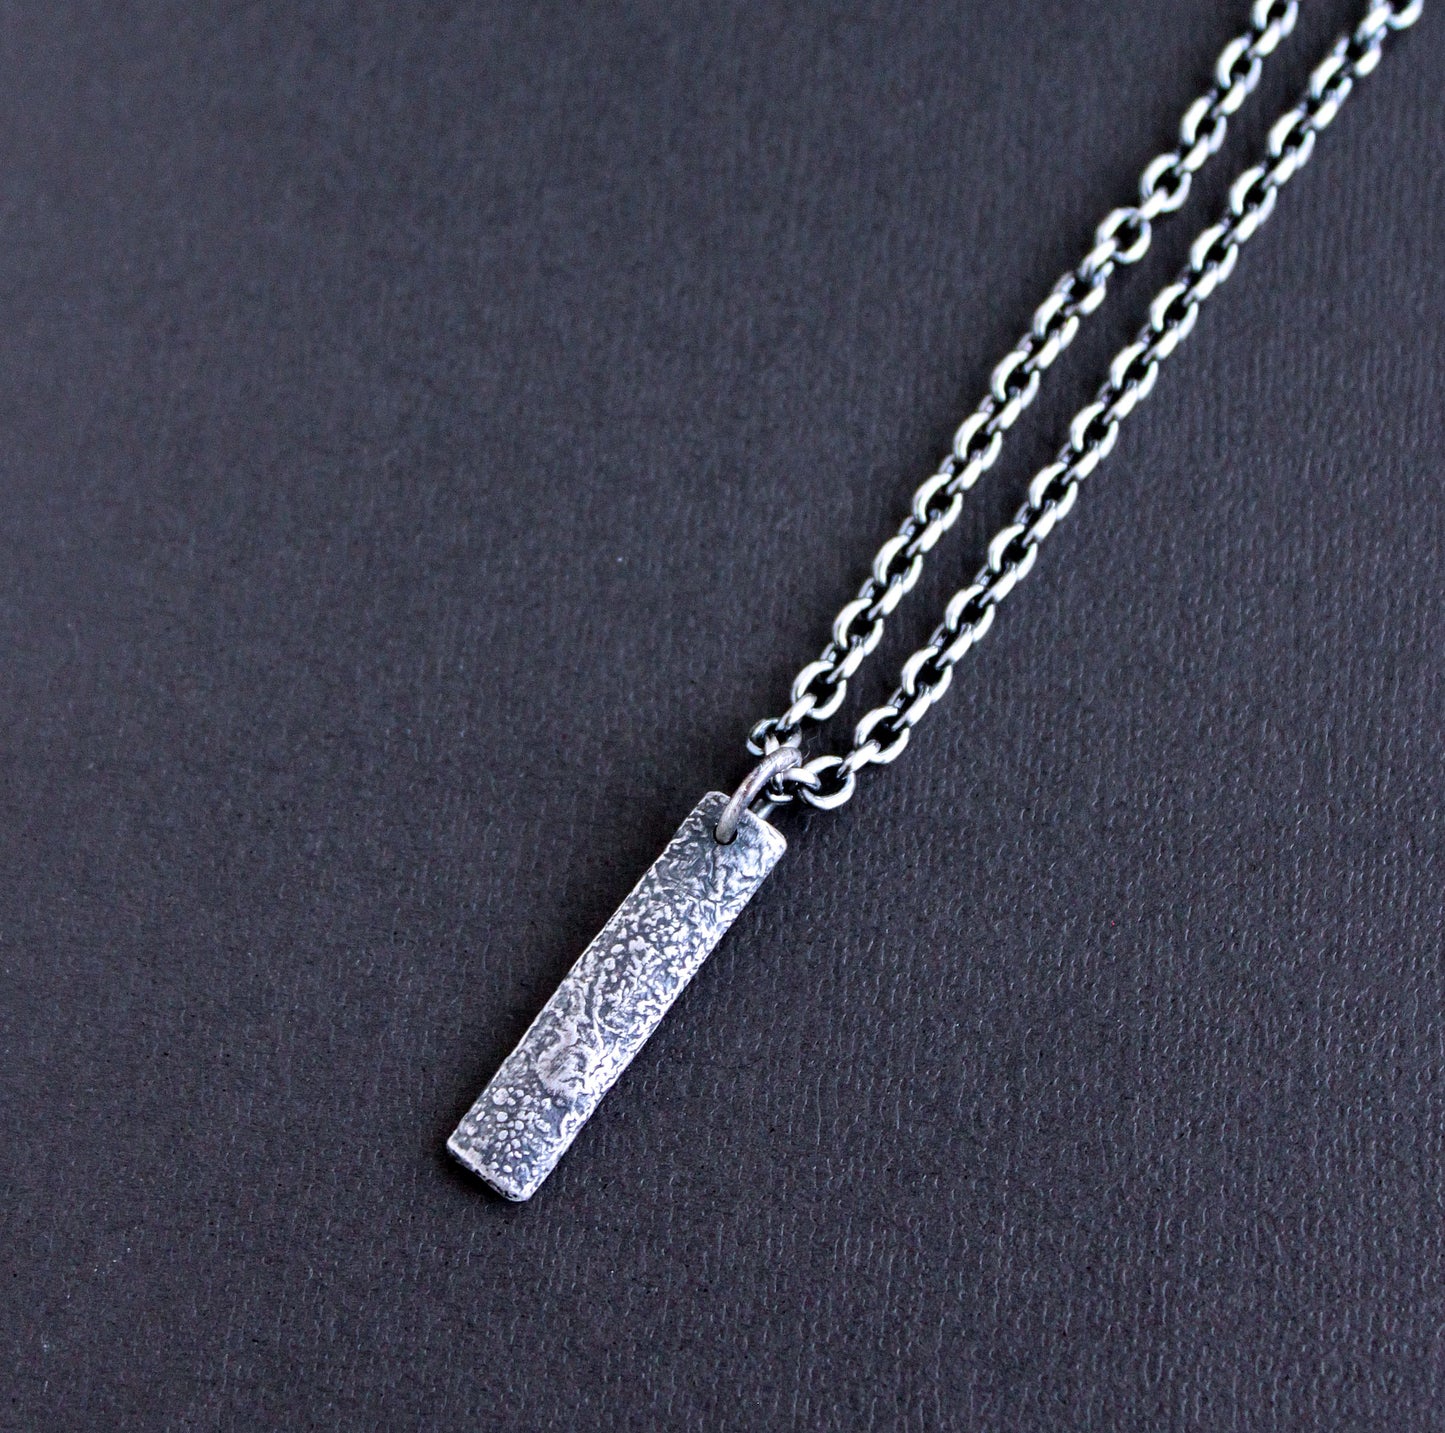 men's rustic silver bar pendant necklace